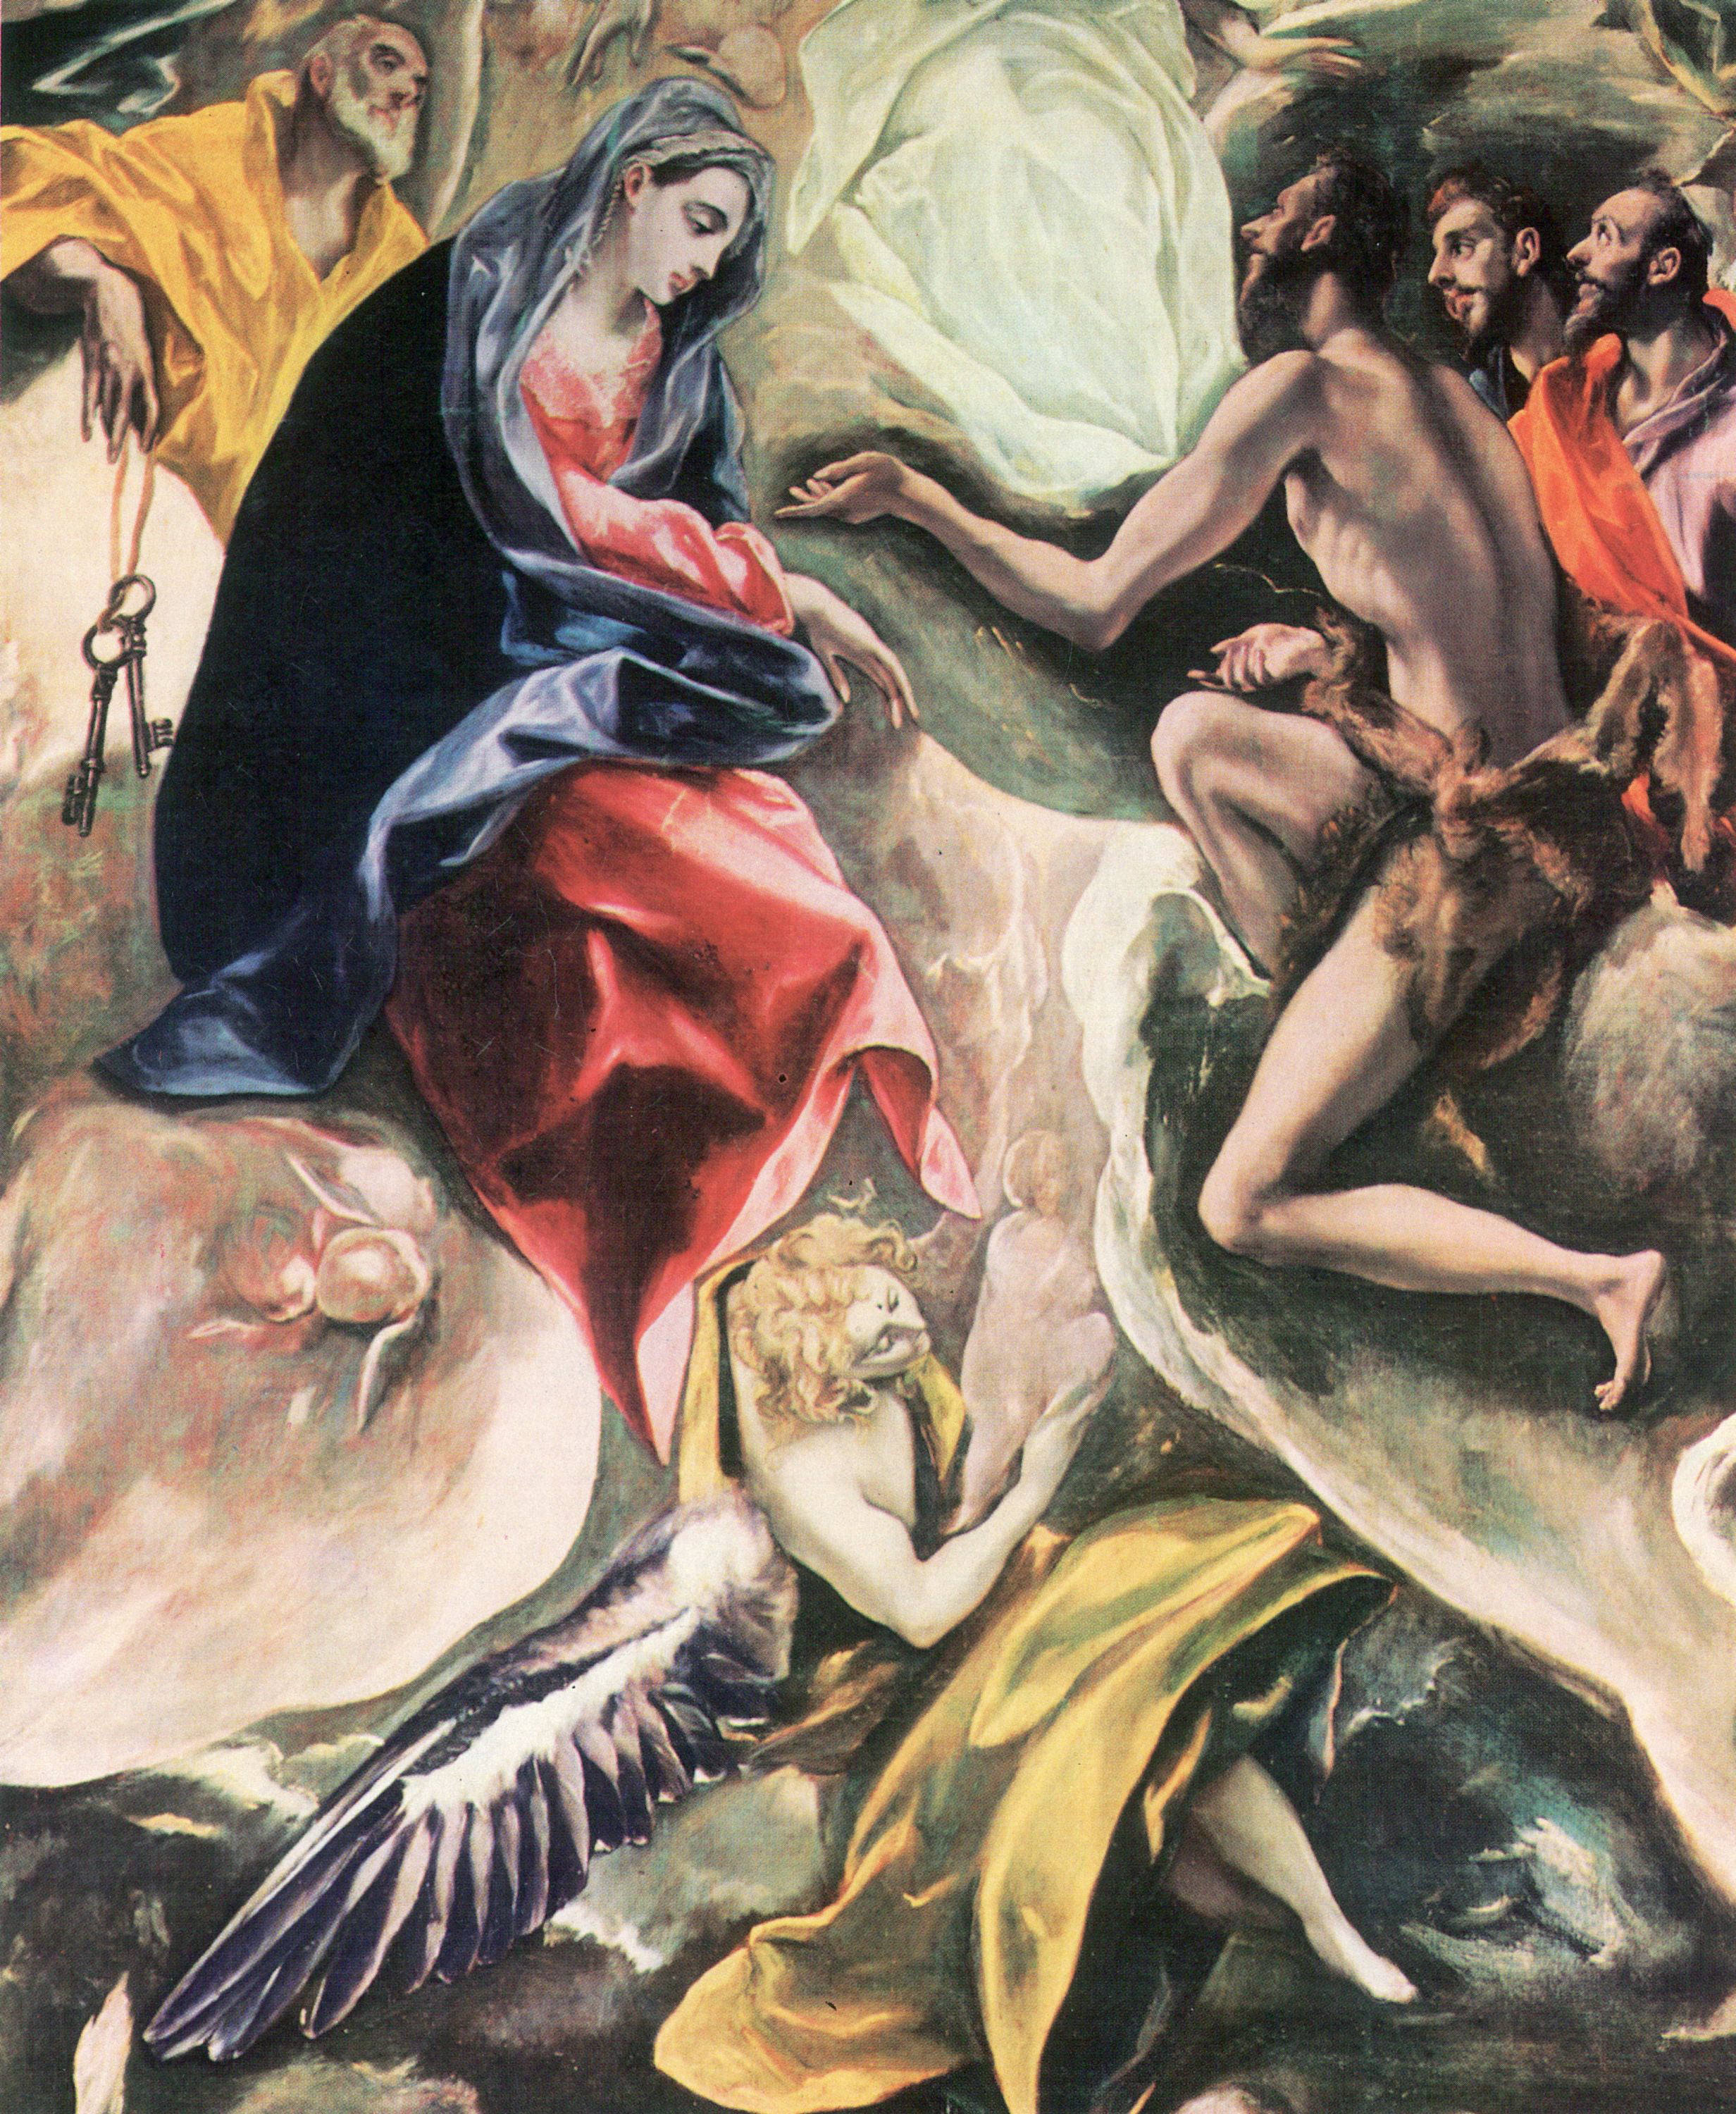 Greco, El The Burial of Count Orgaz, detail [4]12 Inch